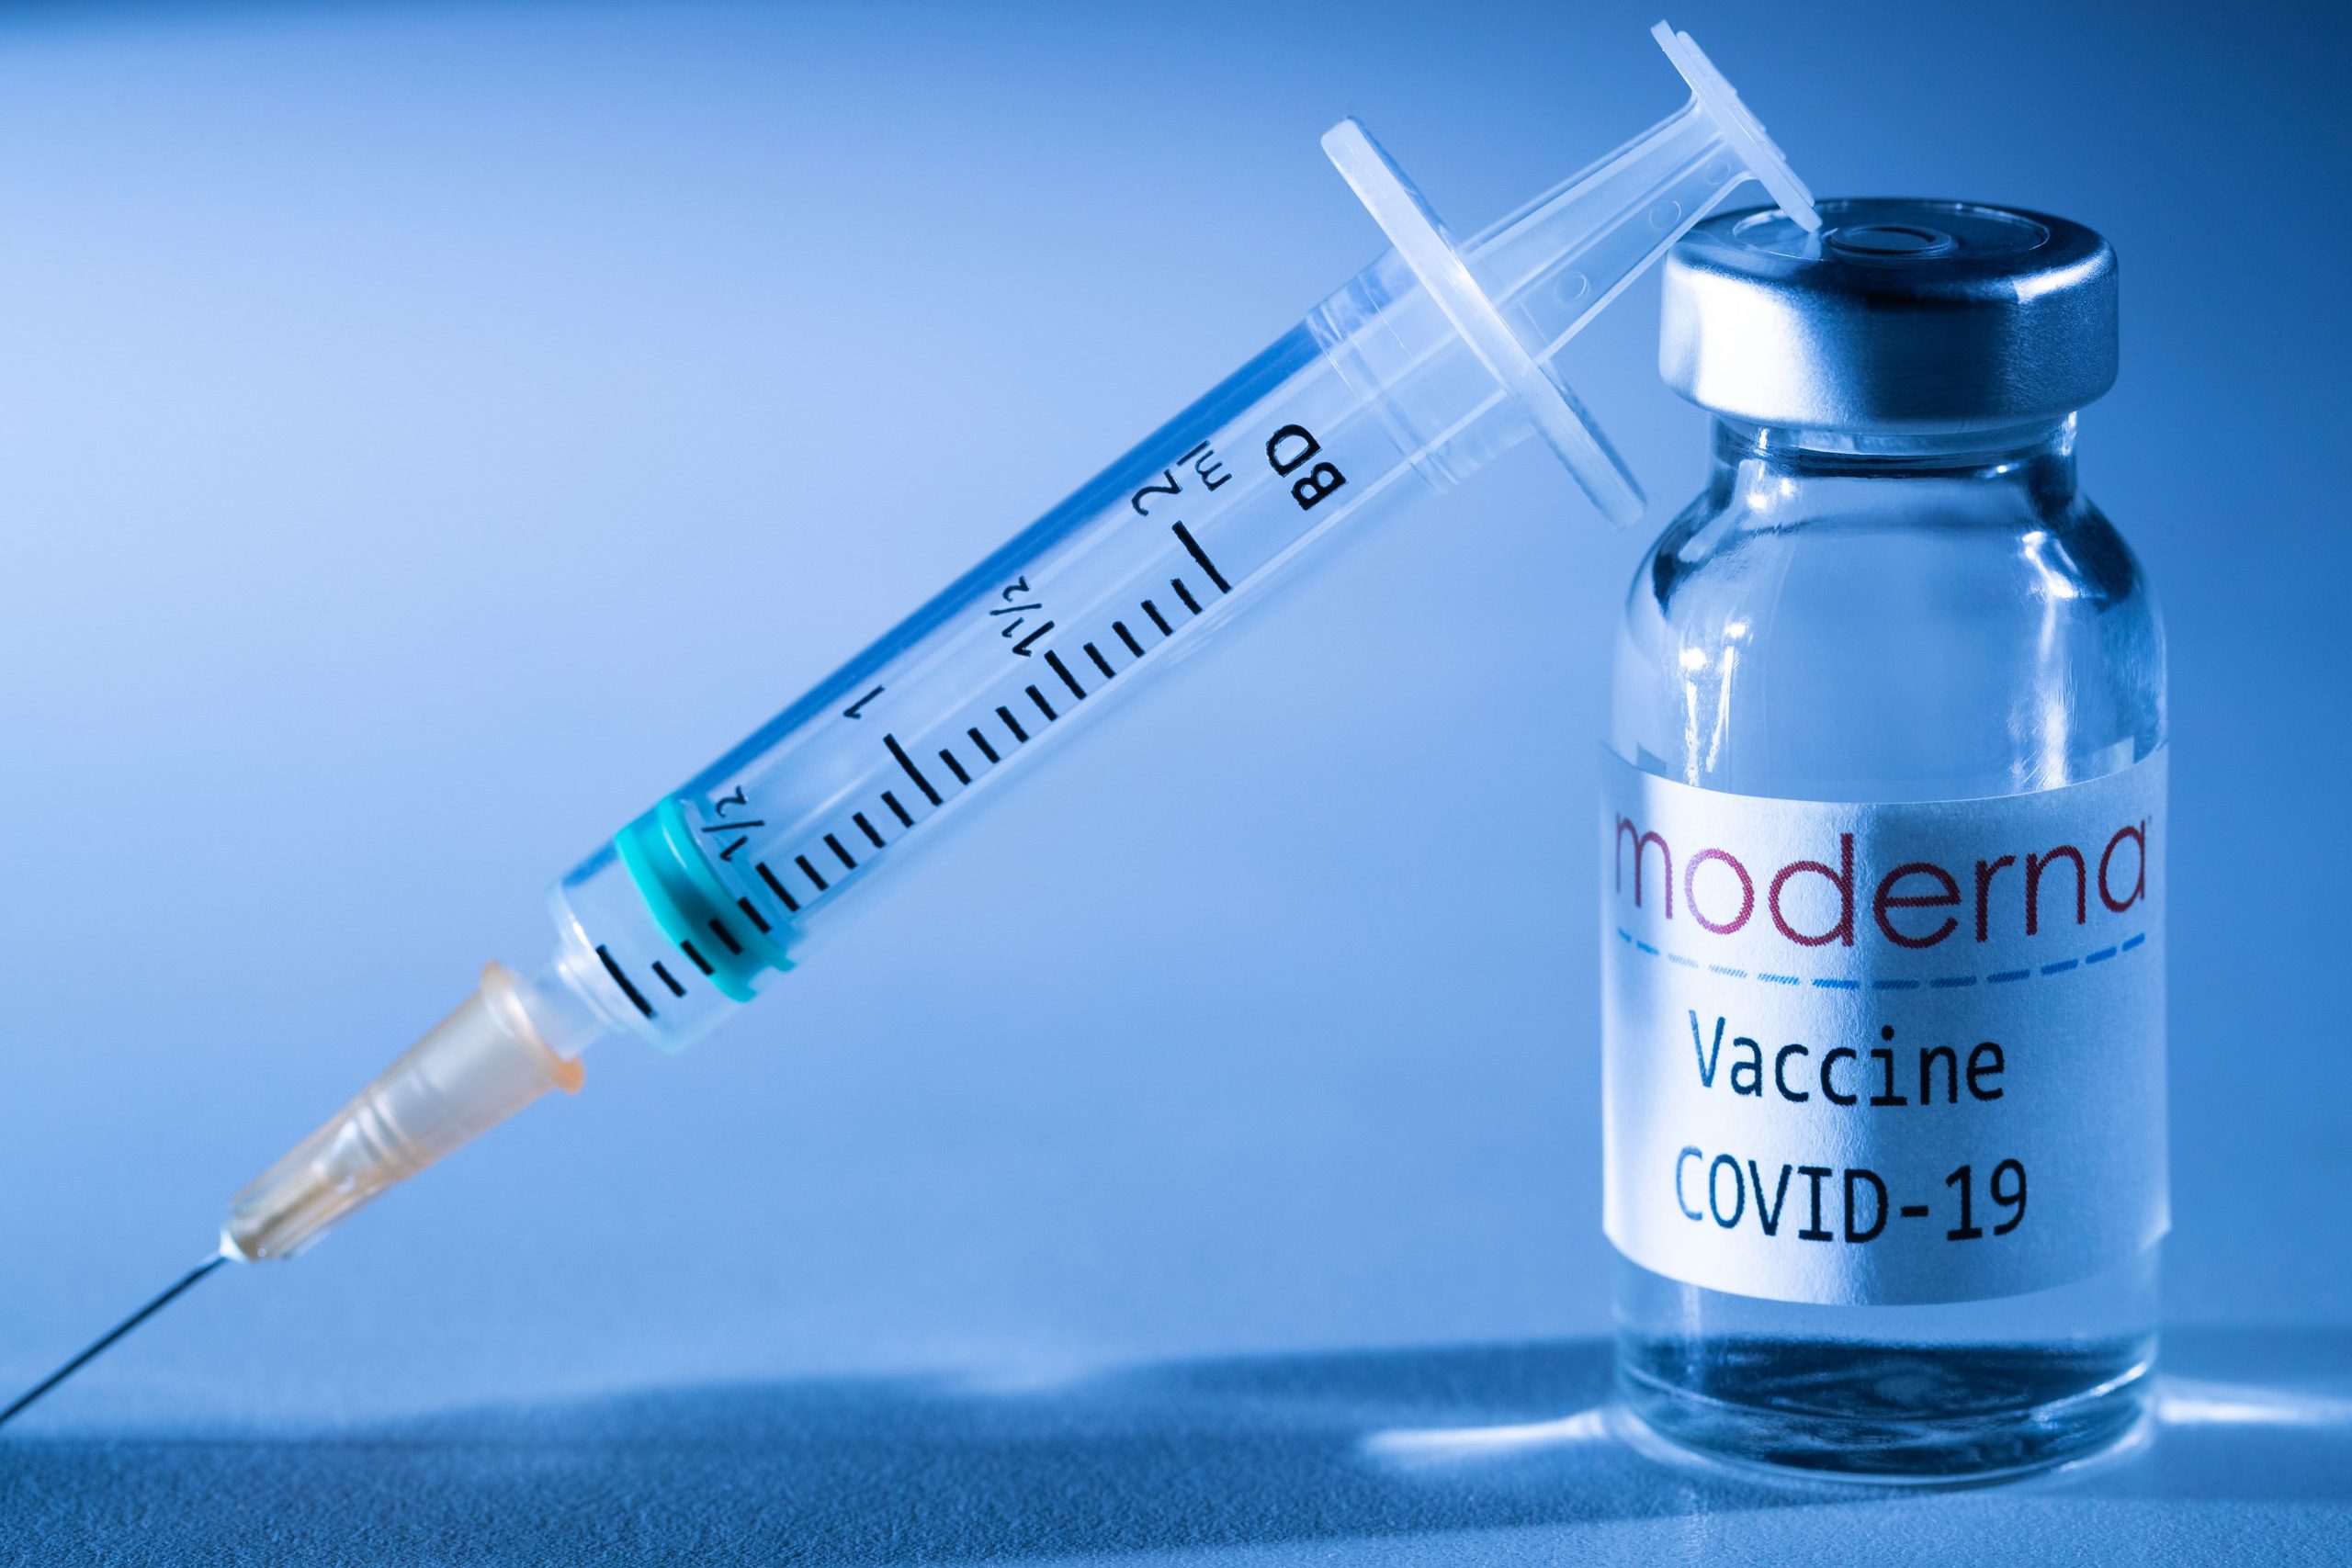 Moderna Covid vaccine FDA accredited for emergency use